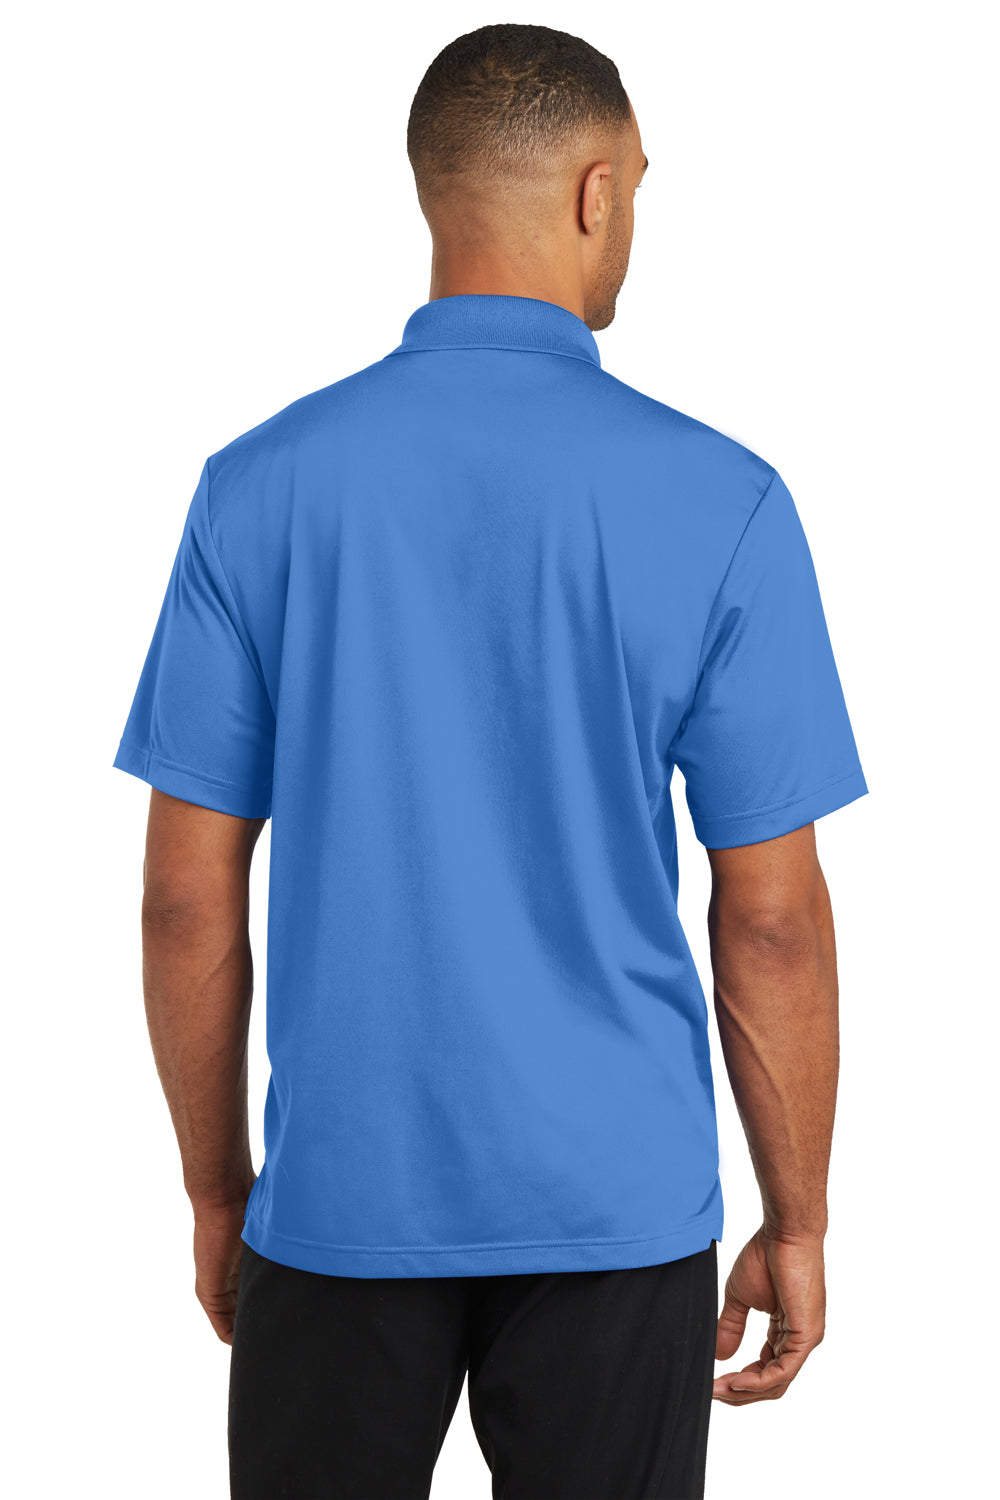 CornerStone CS421 Mens Gripper Moisture Wicking Short Sleeve Polo Shirt Blue Lake Back